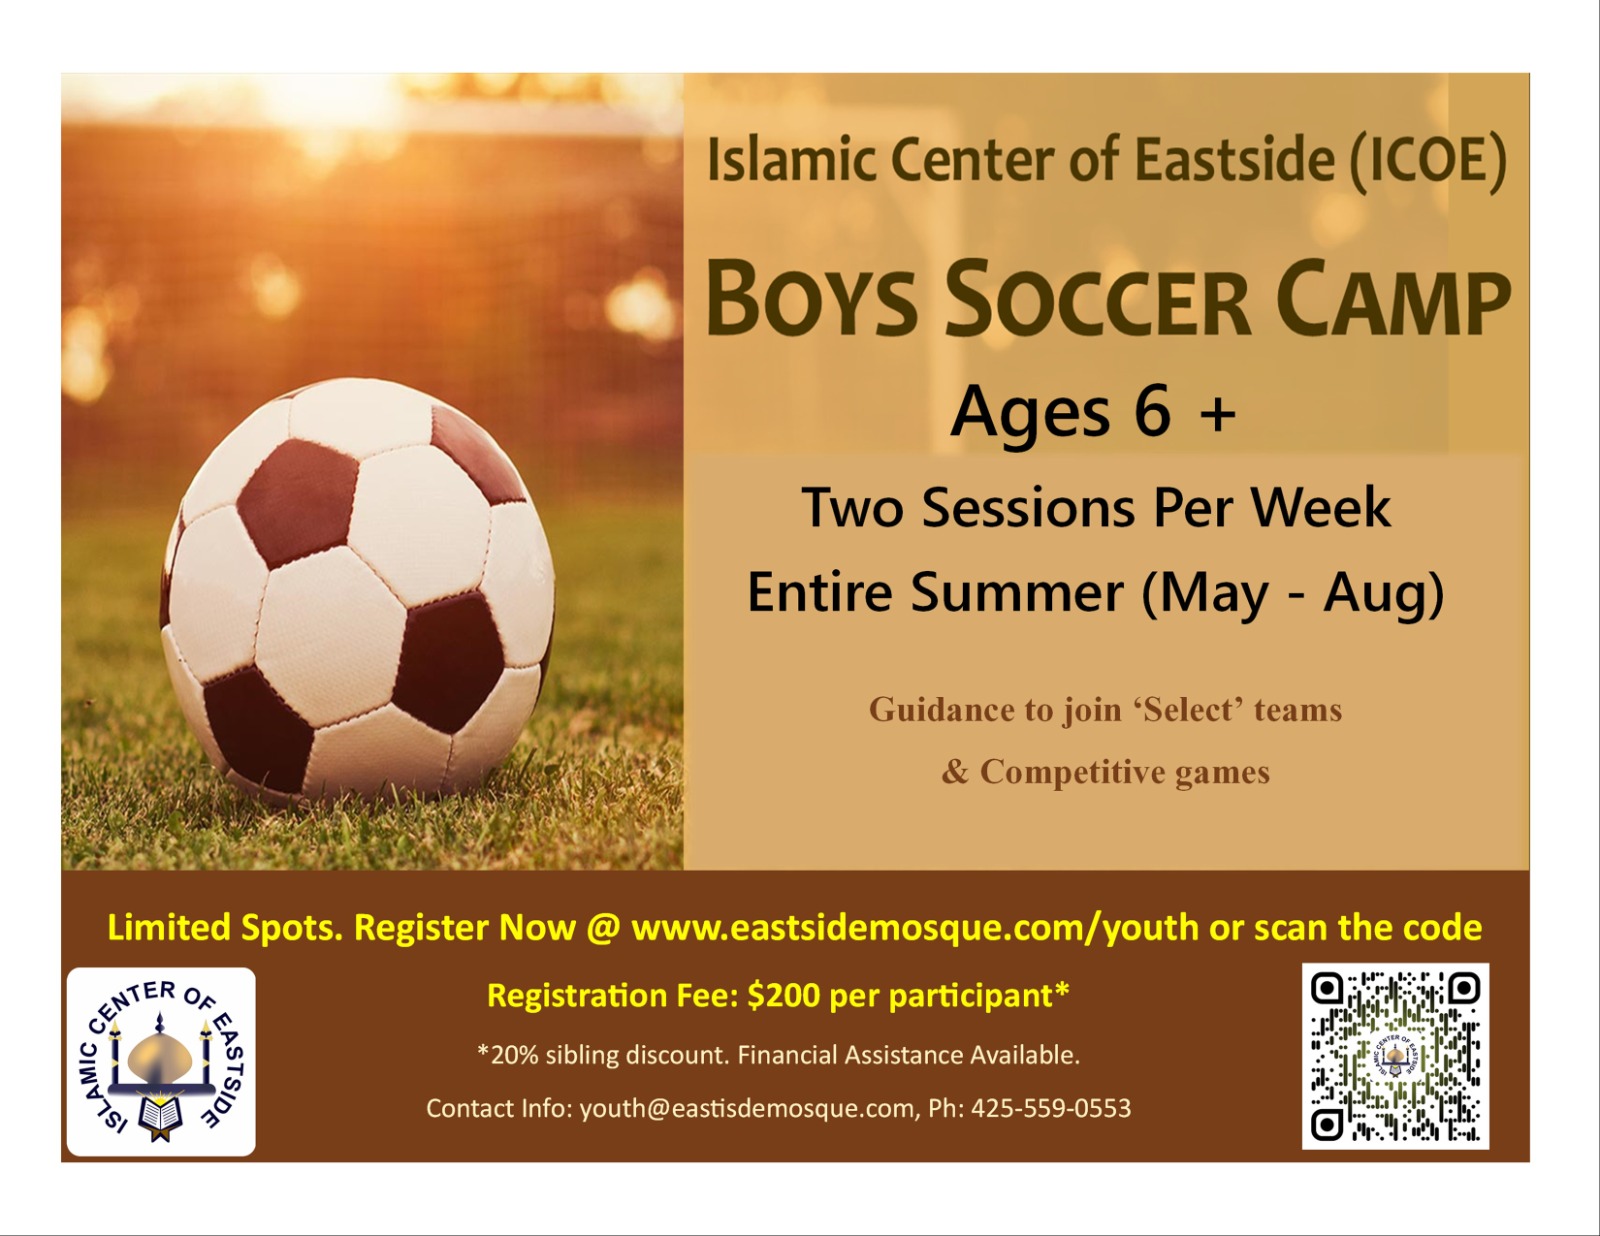 ICOE Boys Soccer Camp